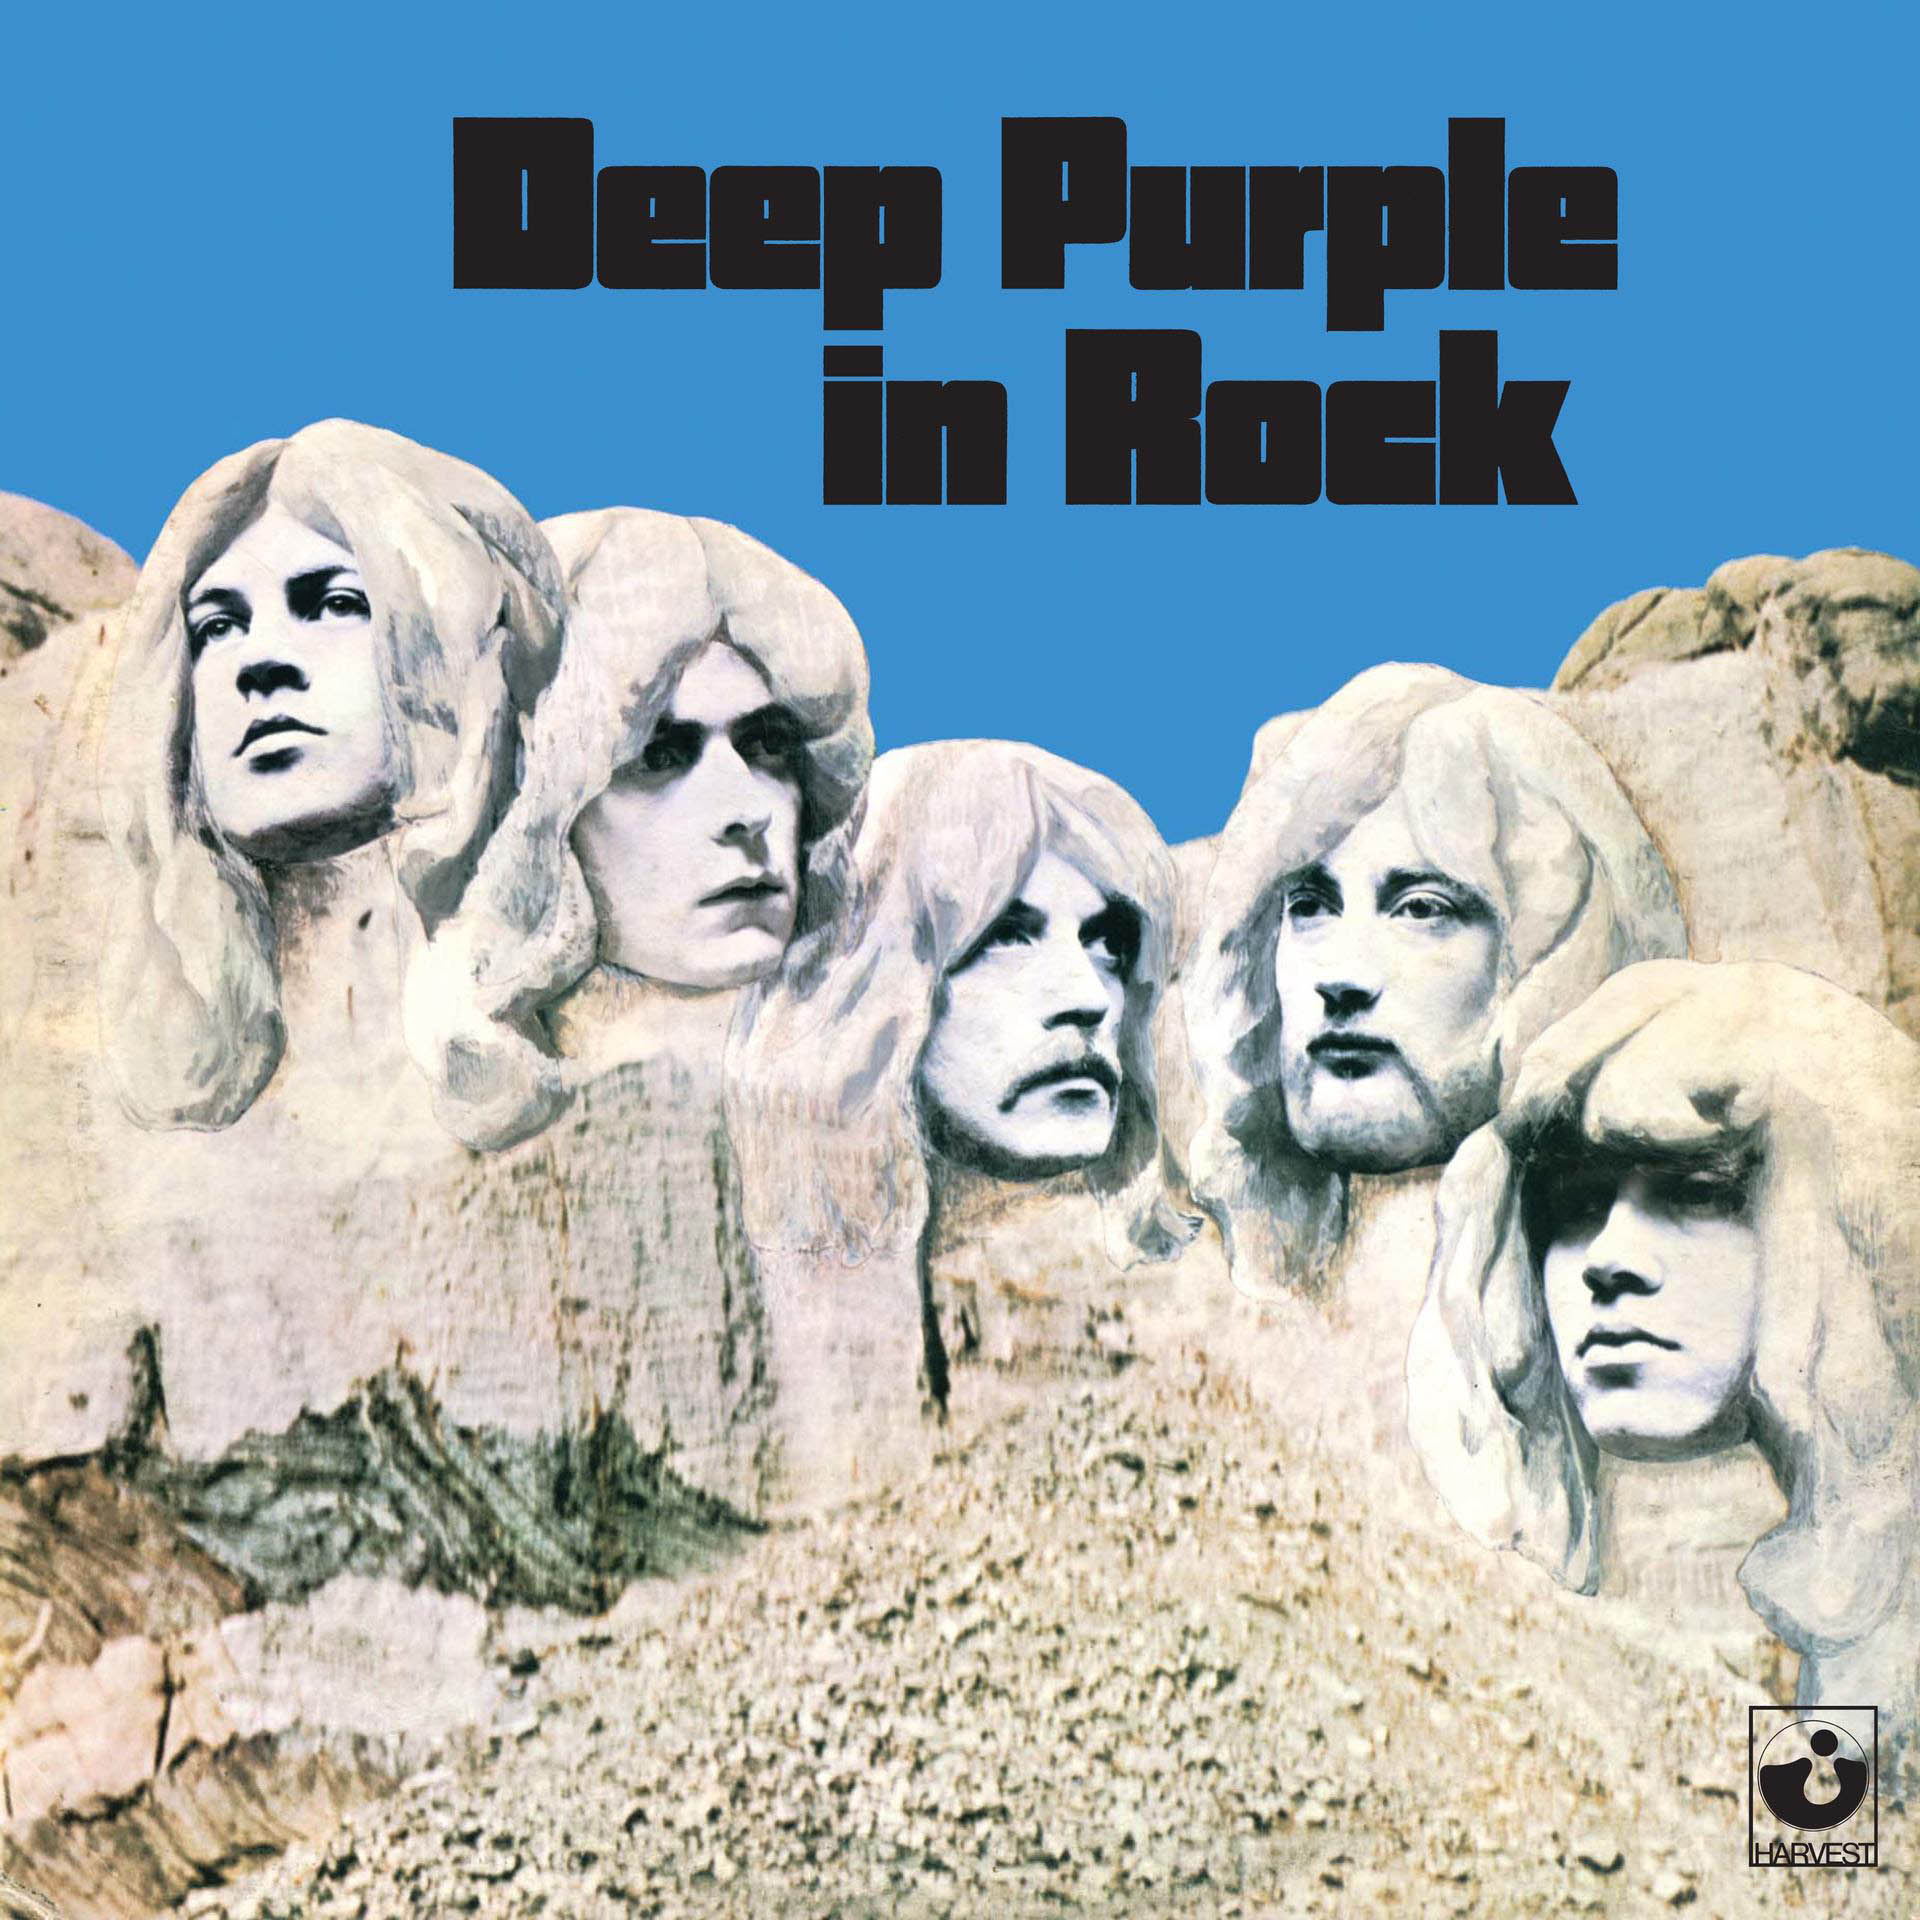 Deep Purple - - Rock In (2018 Remastered Version) (Vinyl)